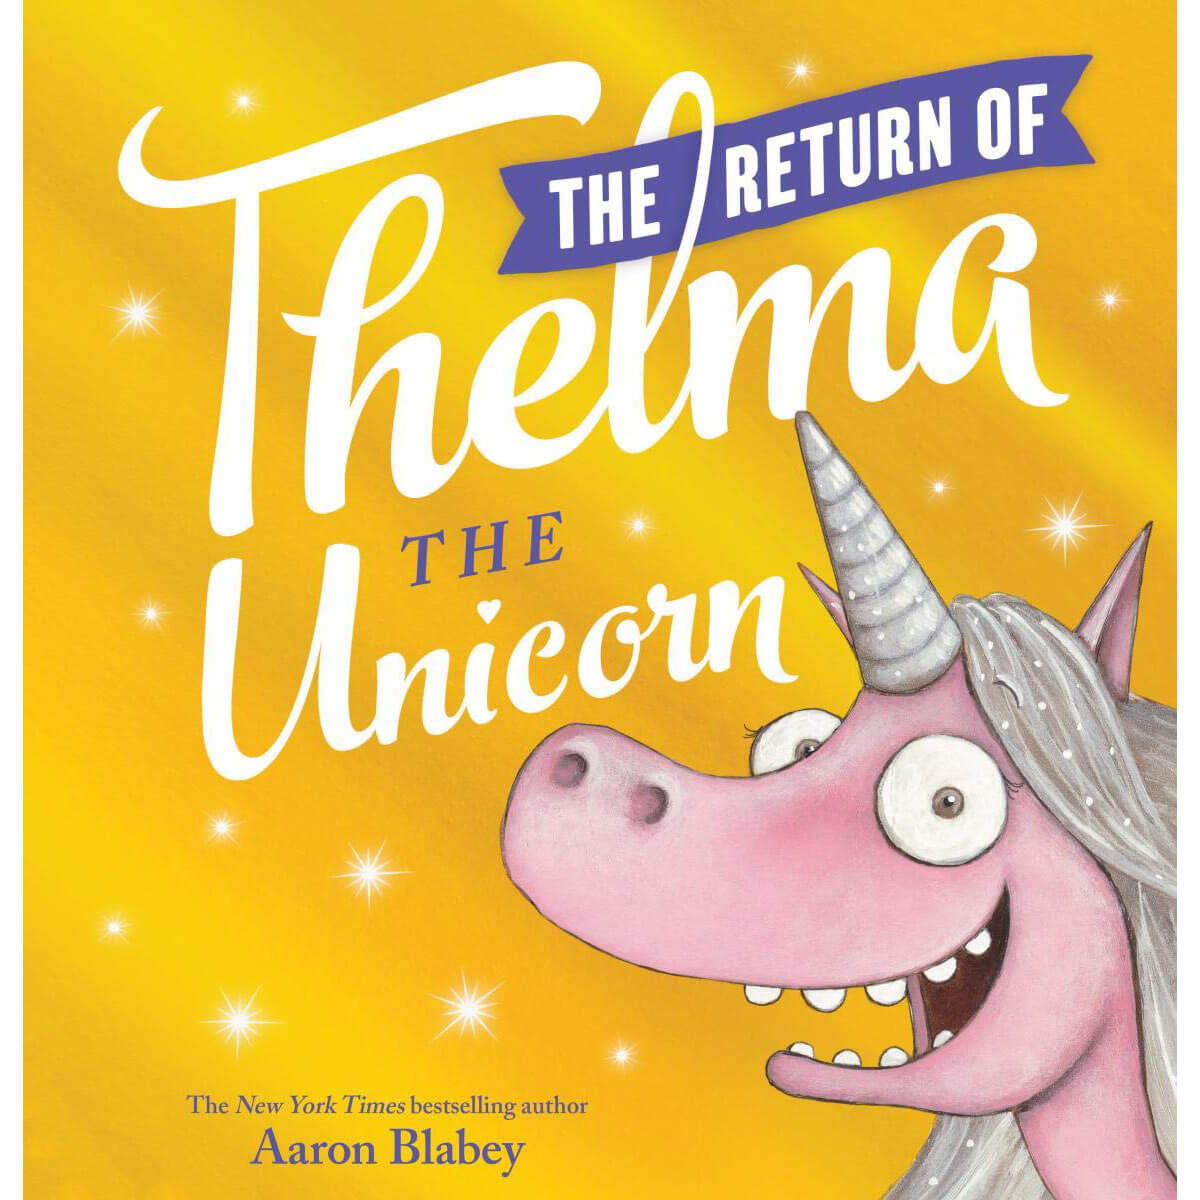 Return of Thelma the Unicorn